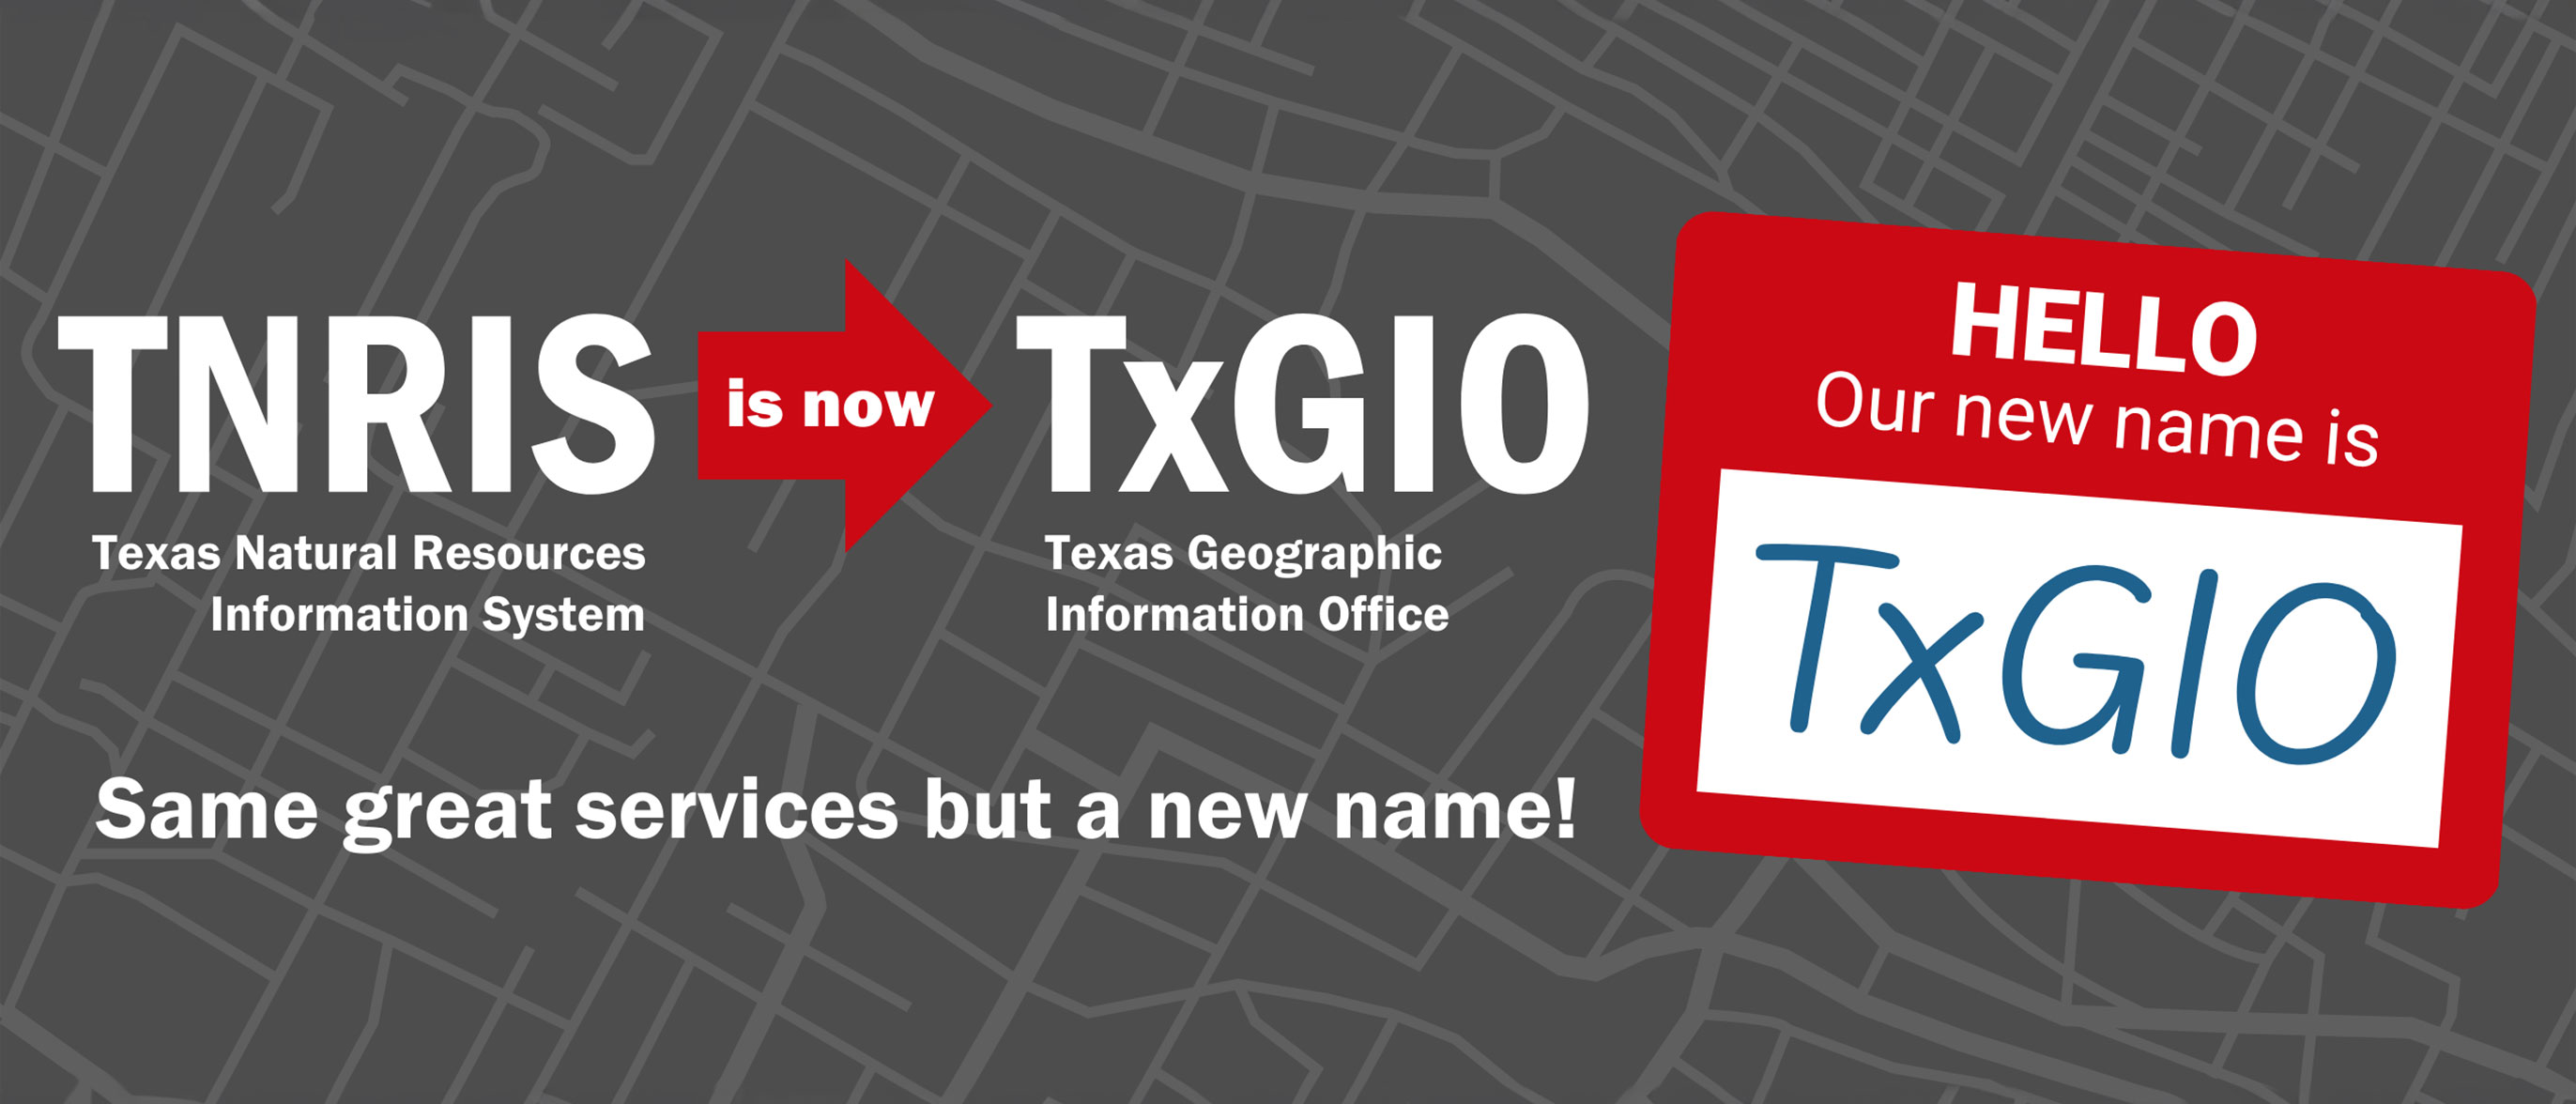 TNRIS has a name change to TxGIO